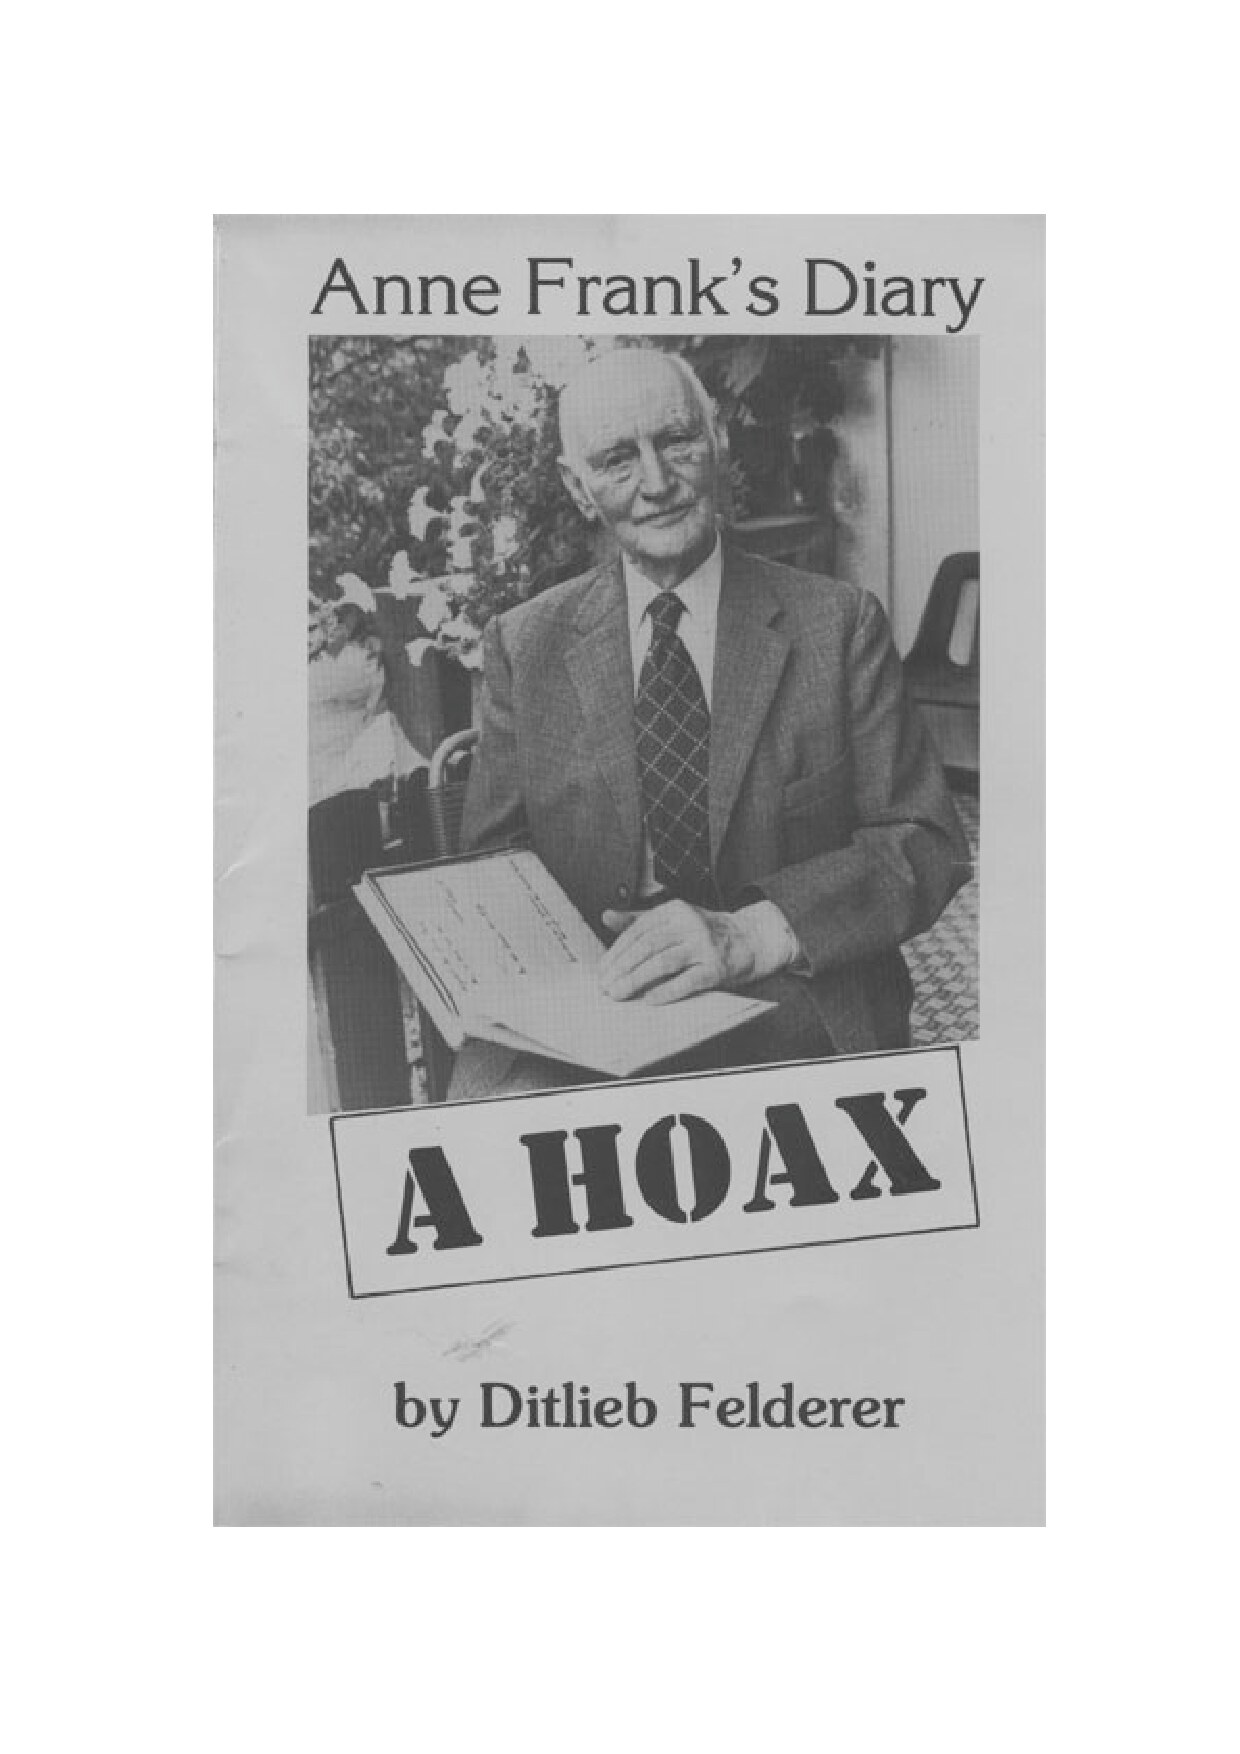 Felderer, Ditlieb; Anne Frank's Diary - a Hoax